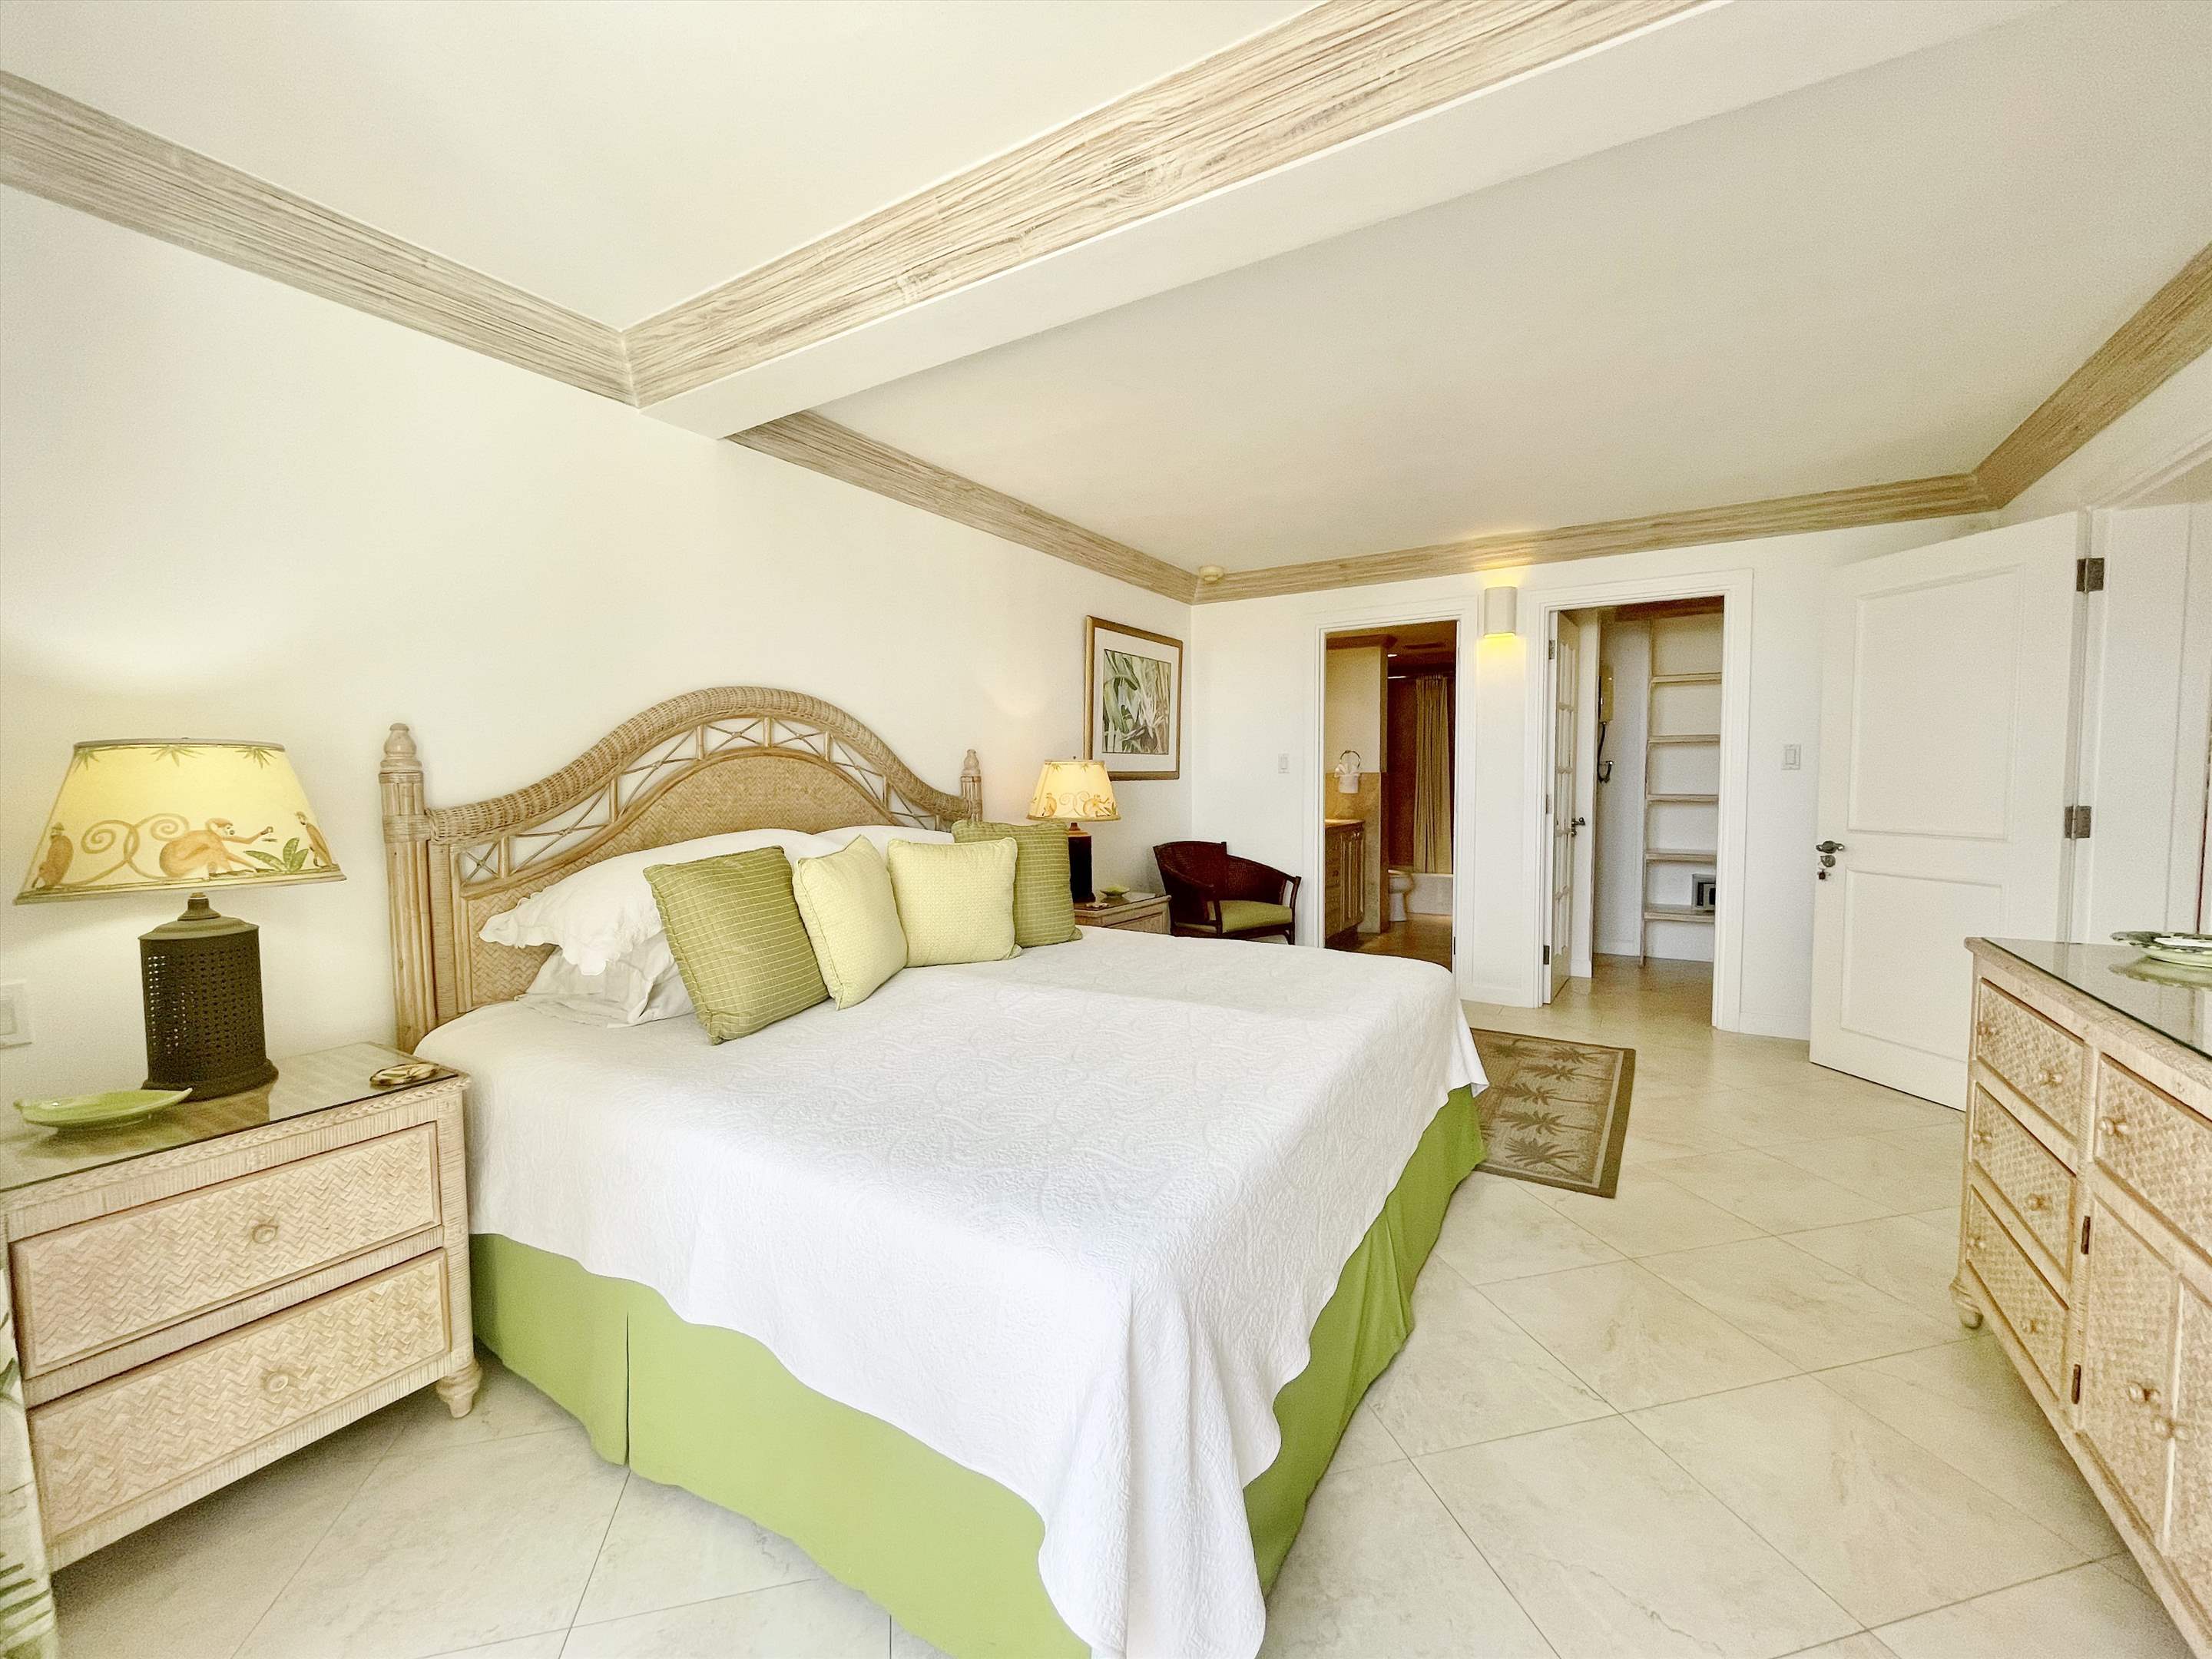 Villas on the Beach 101, 2 bedroom, 2 bedroom apartment in St. James & West Coast, Barbados Photo #13